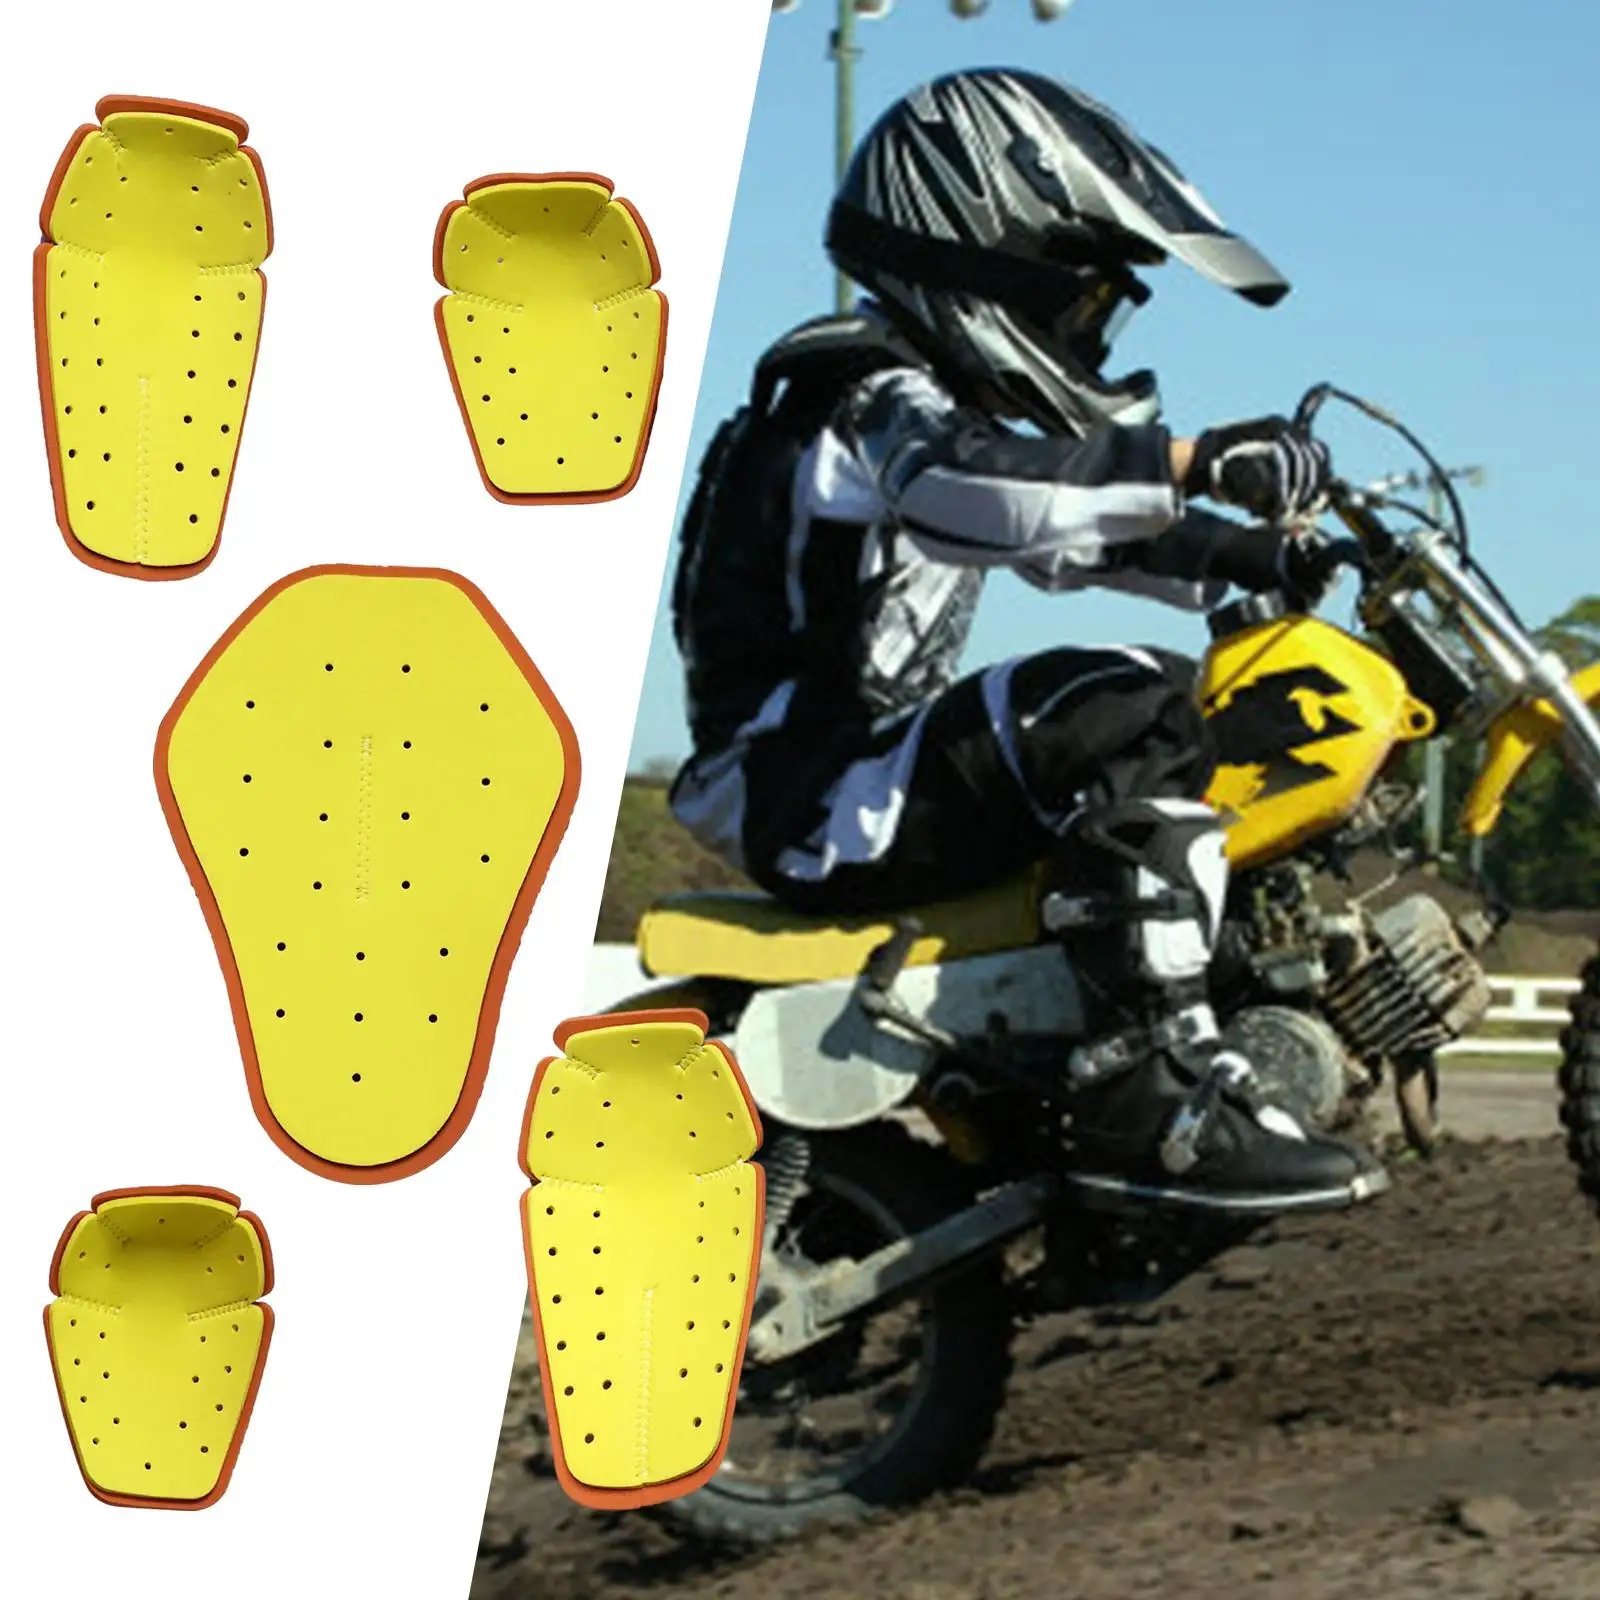 5x Motorbike Body Protective Gear Insert Protector Set for Biker